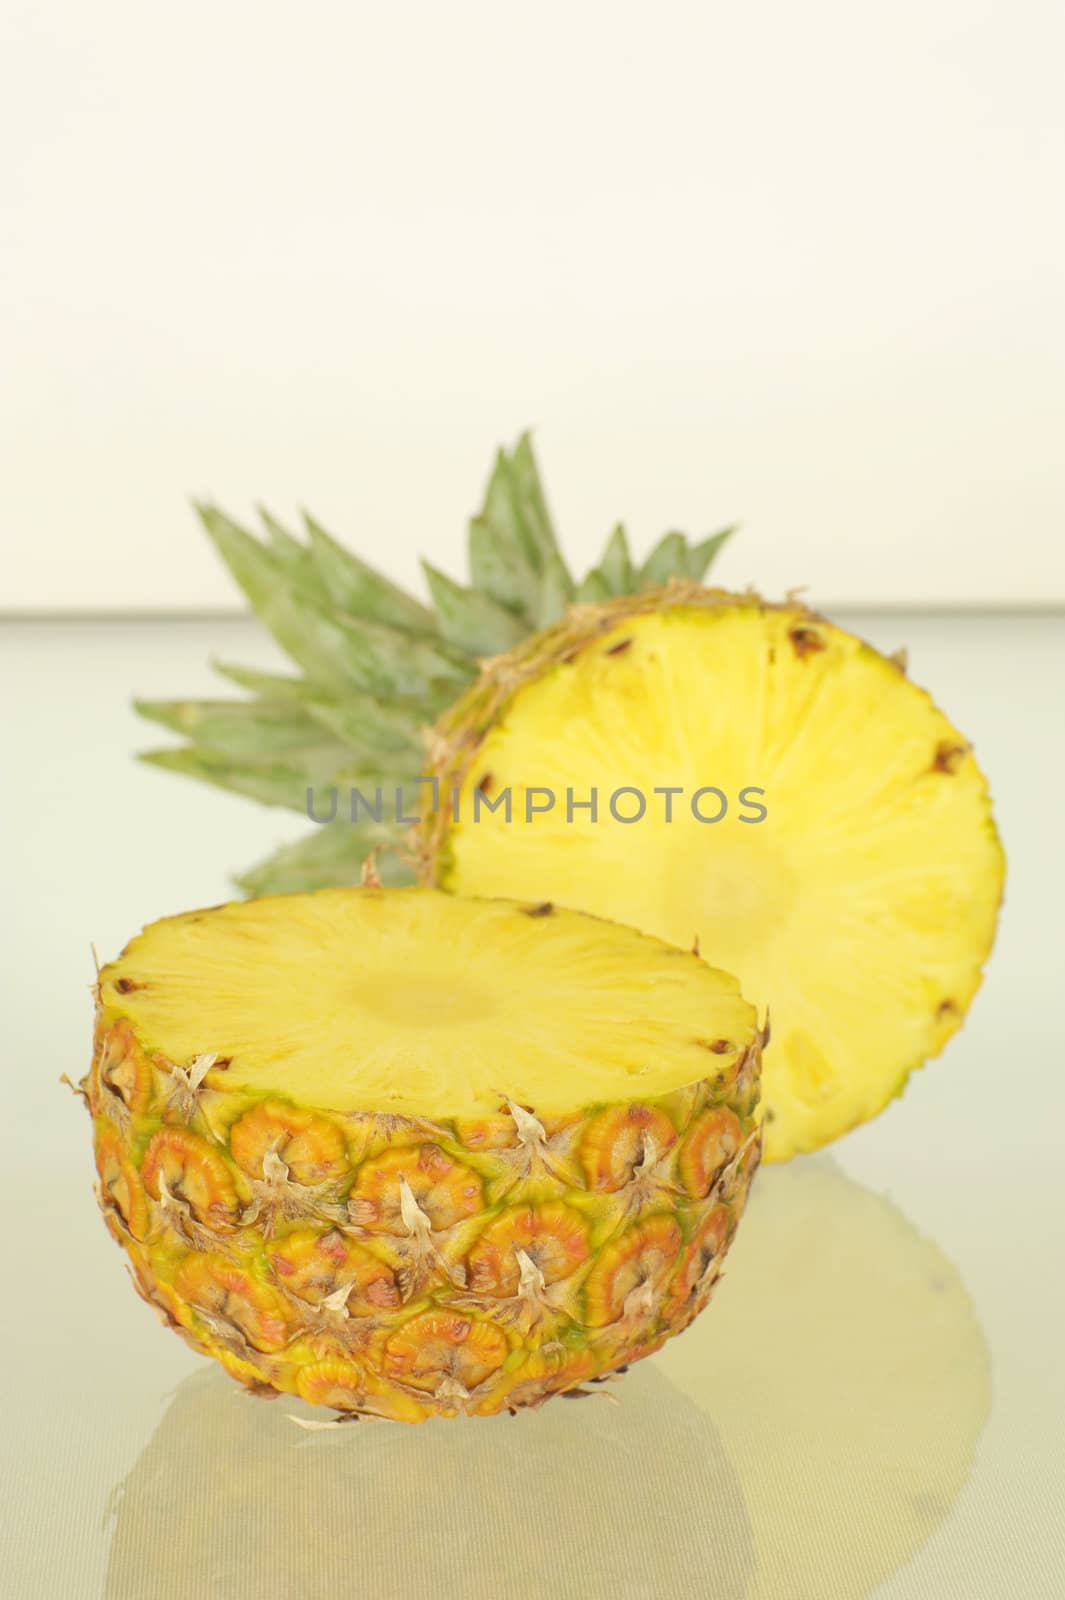 Delicious sweet ripe pineapple cut in half.